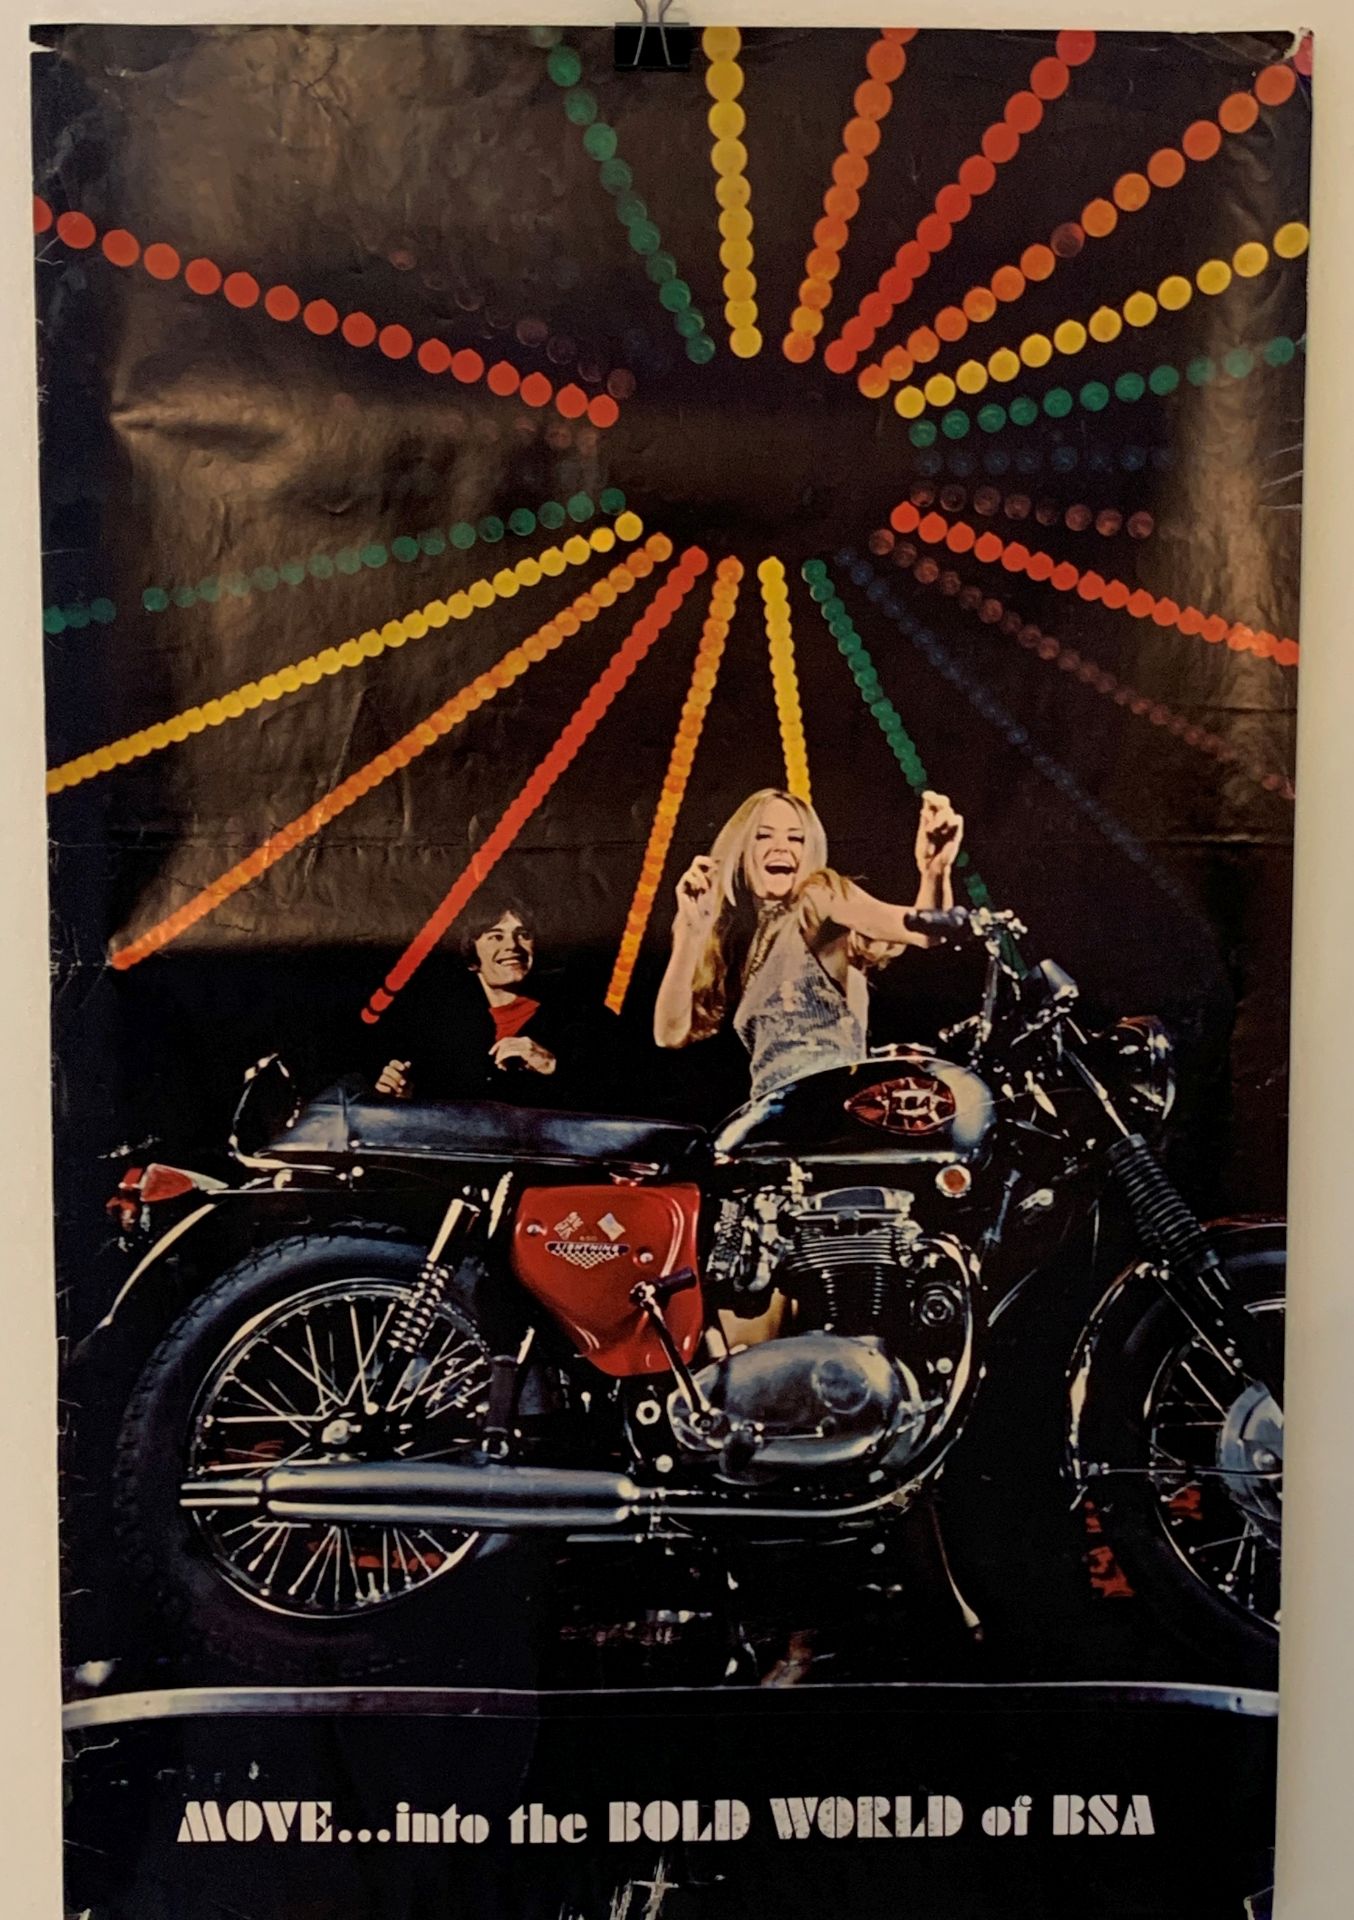 A rare and original BSA advertising poster